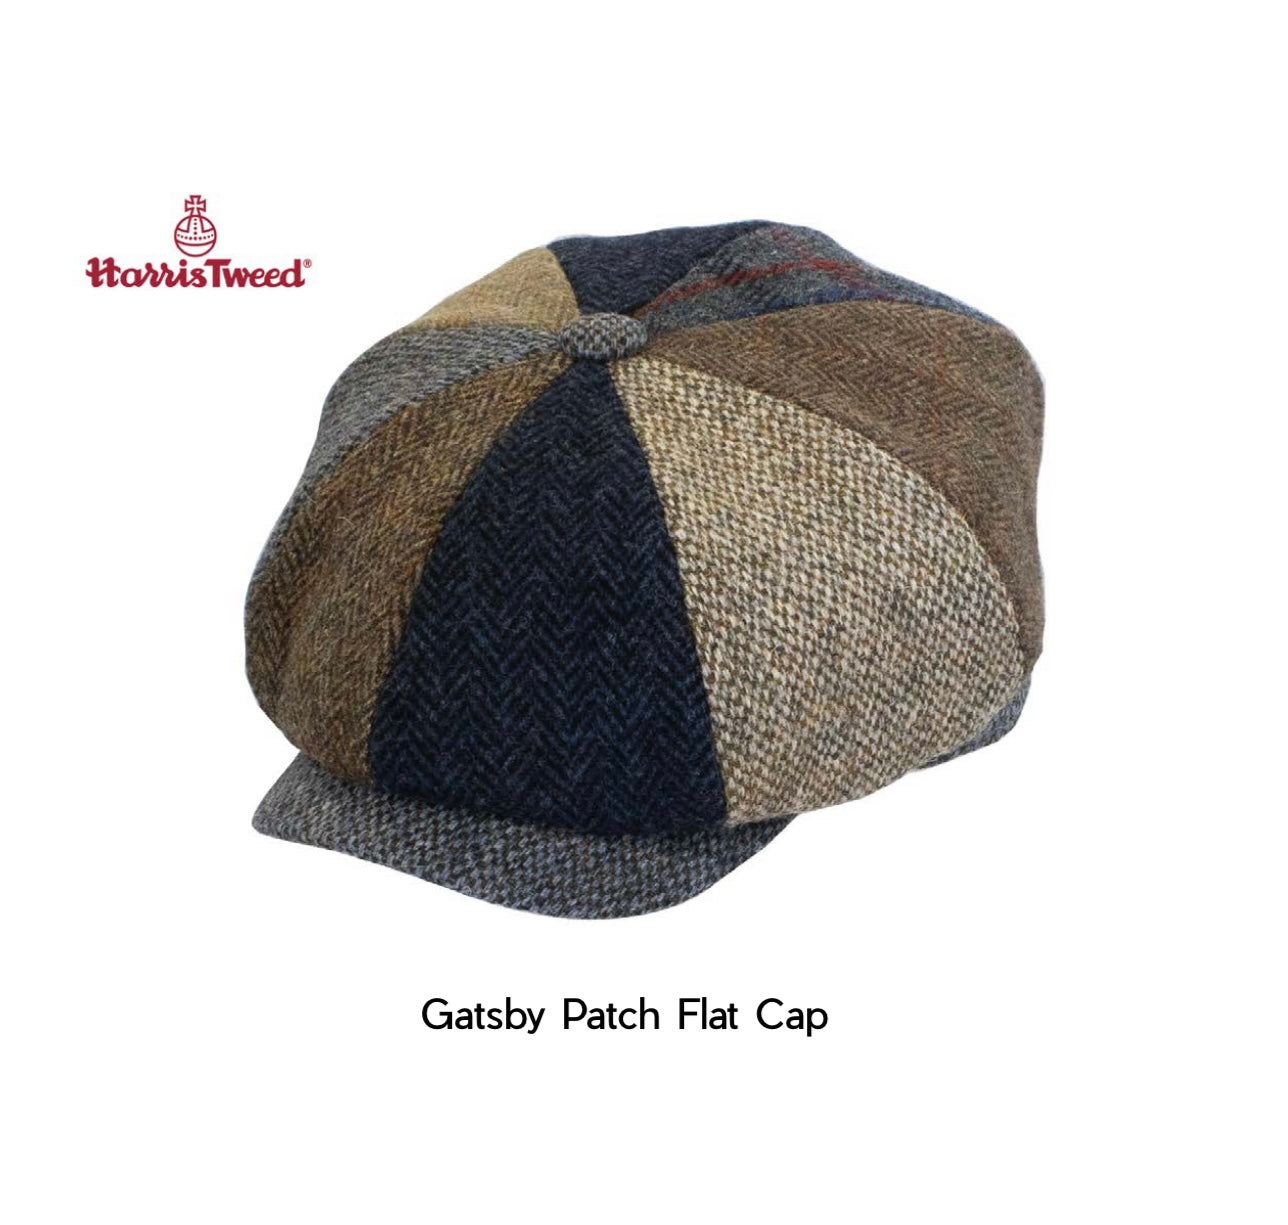 Gatsby Cap - Medium/57 cms